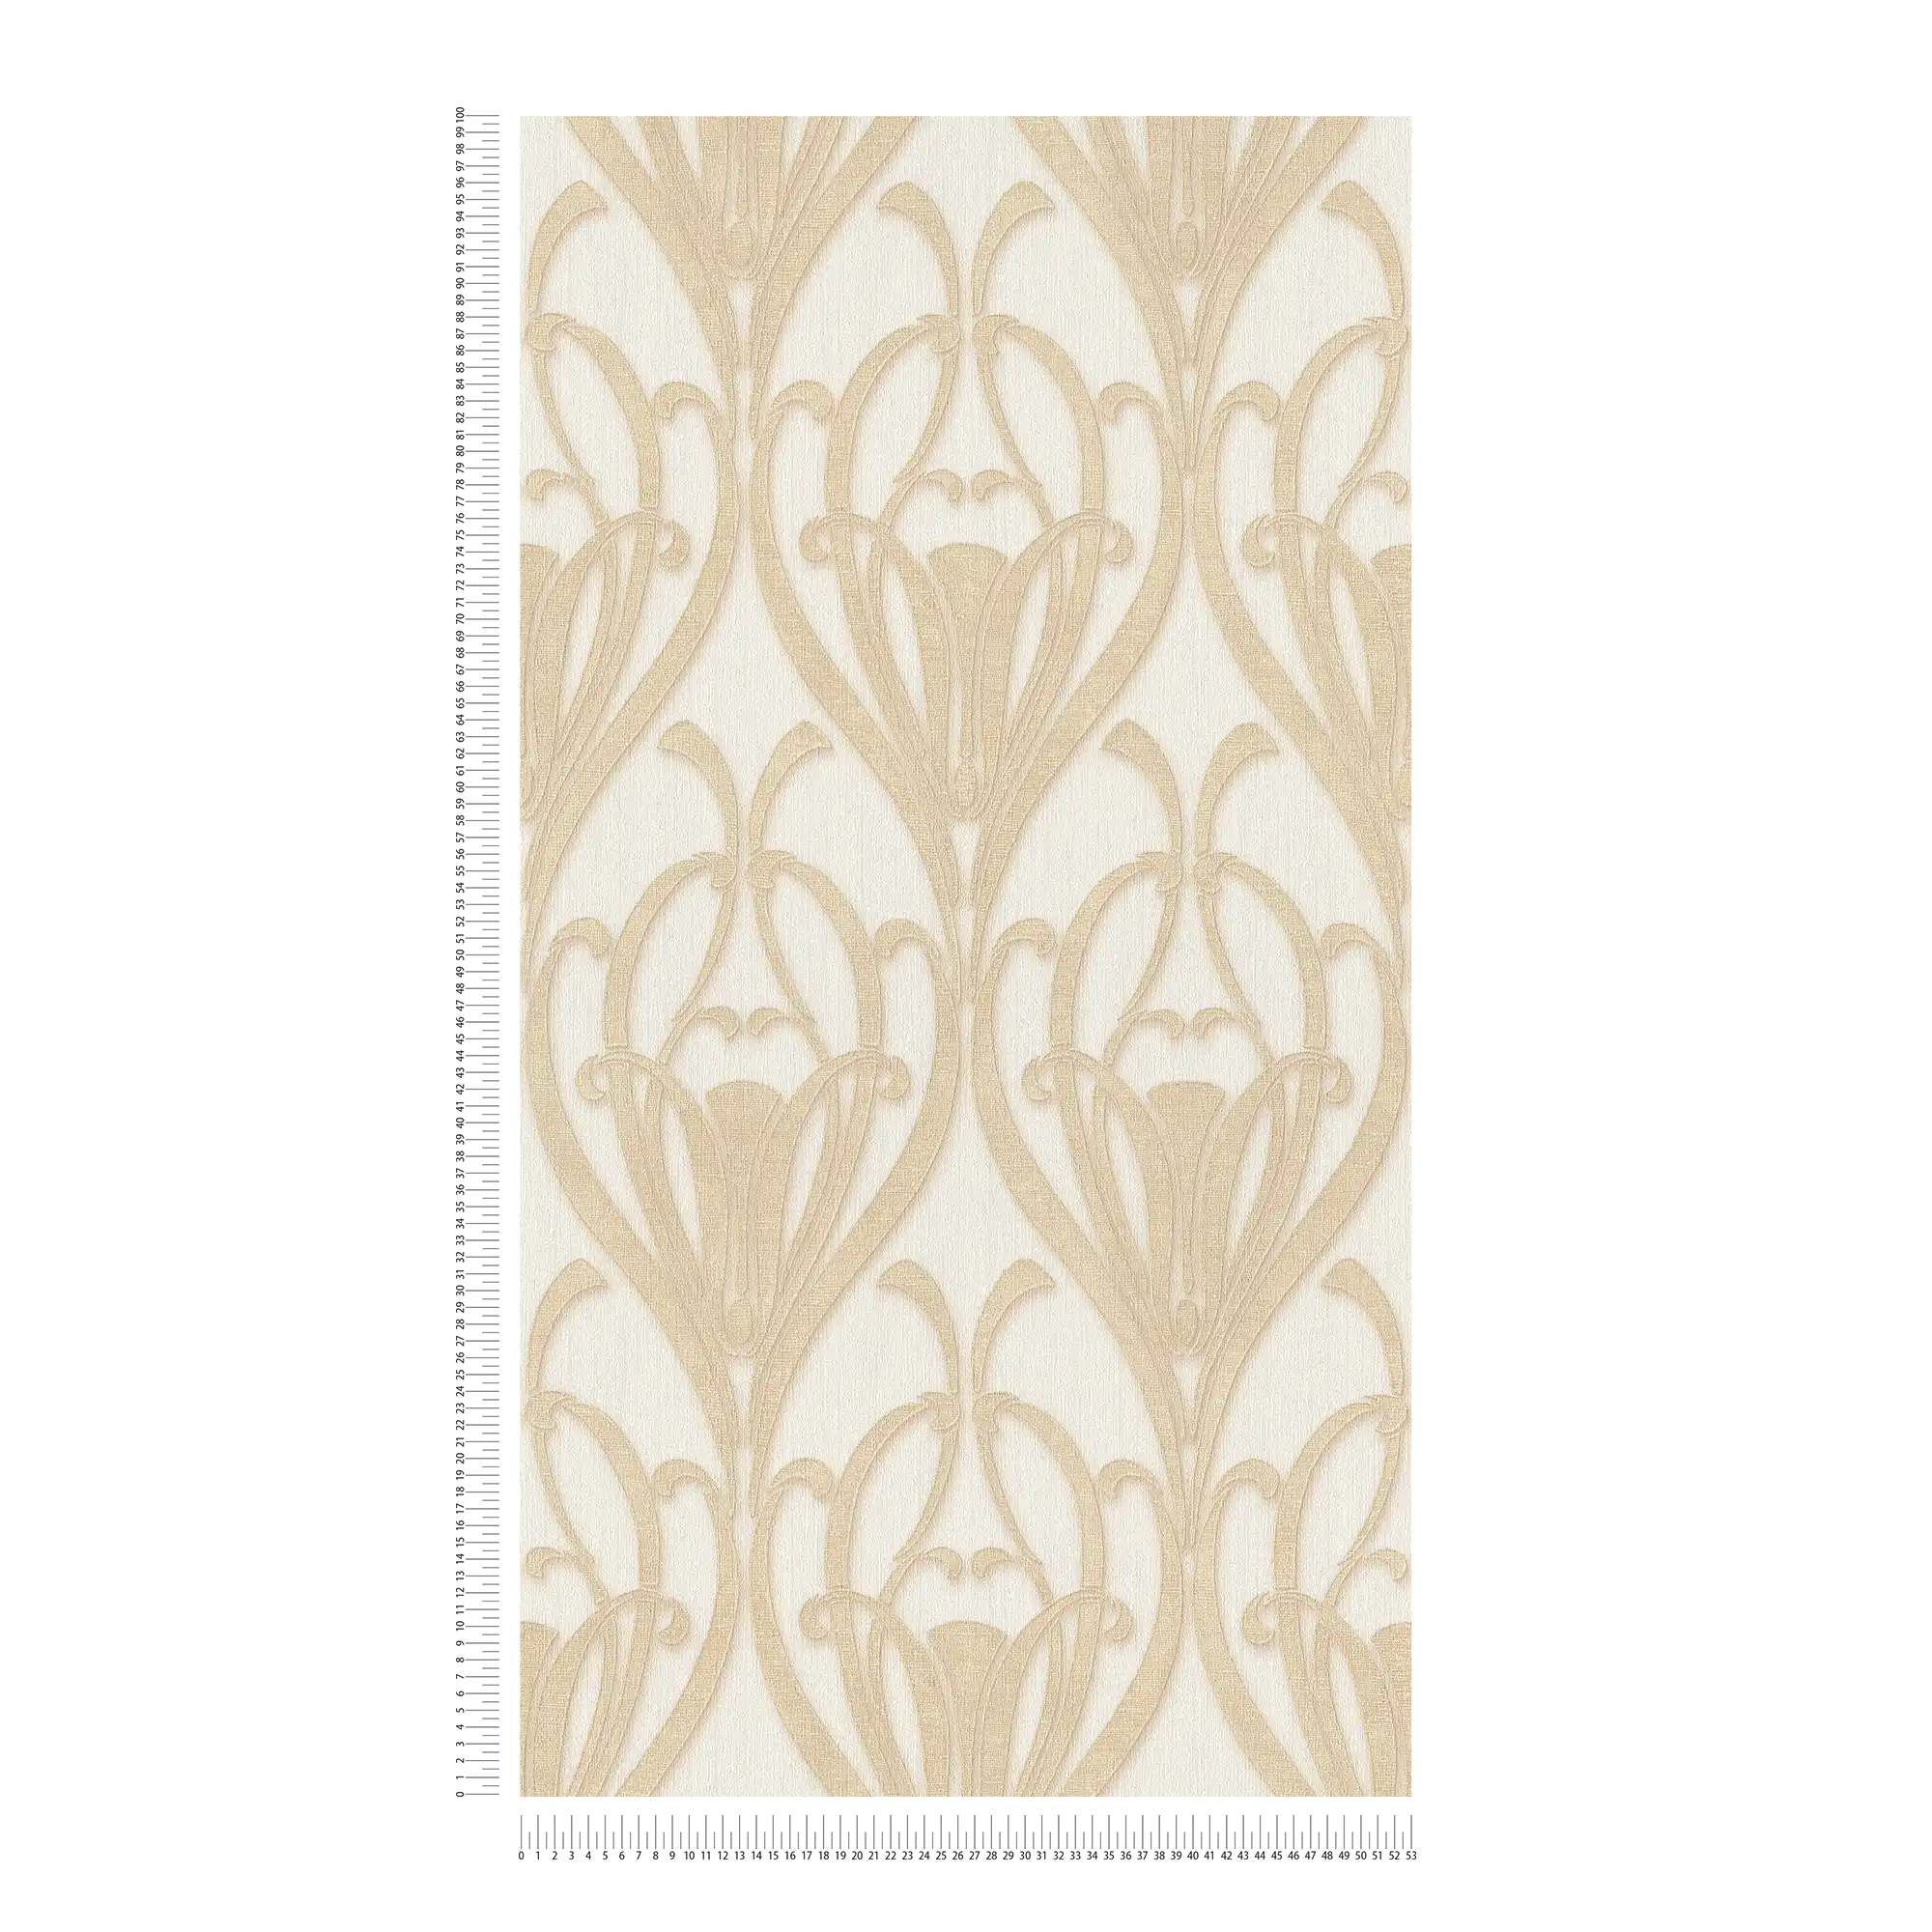             Art Deco wallpaper with golden pattern & textile texture
        